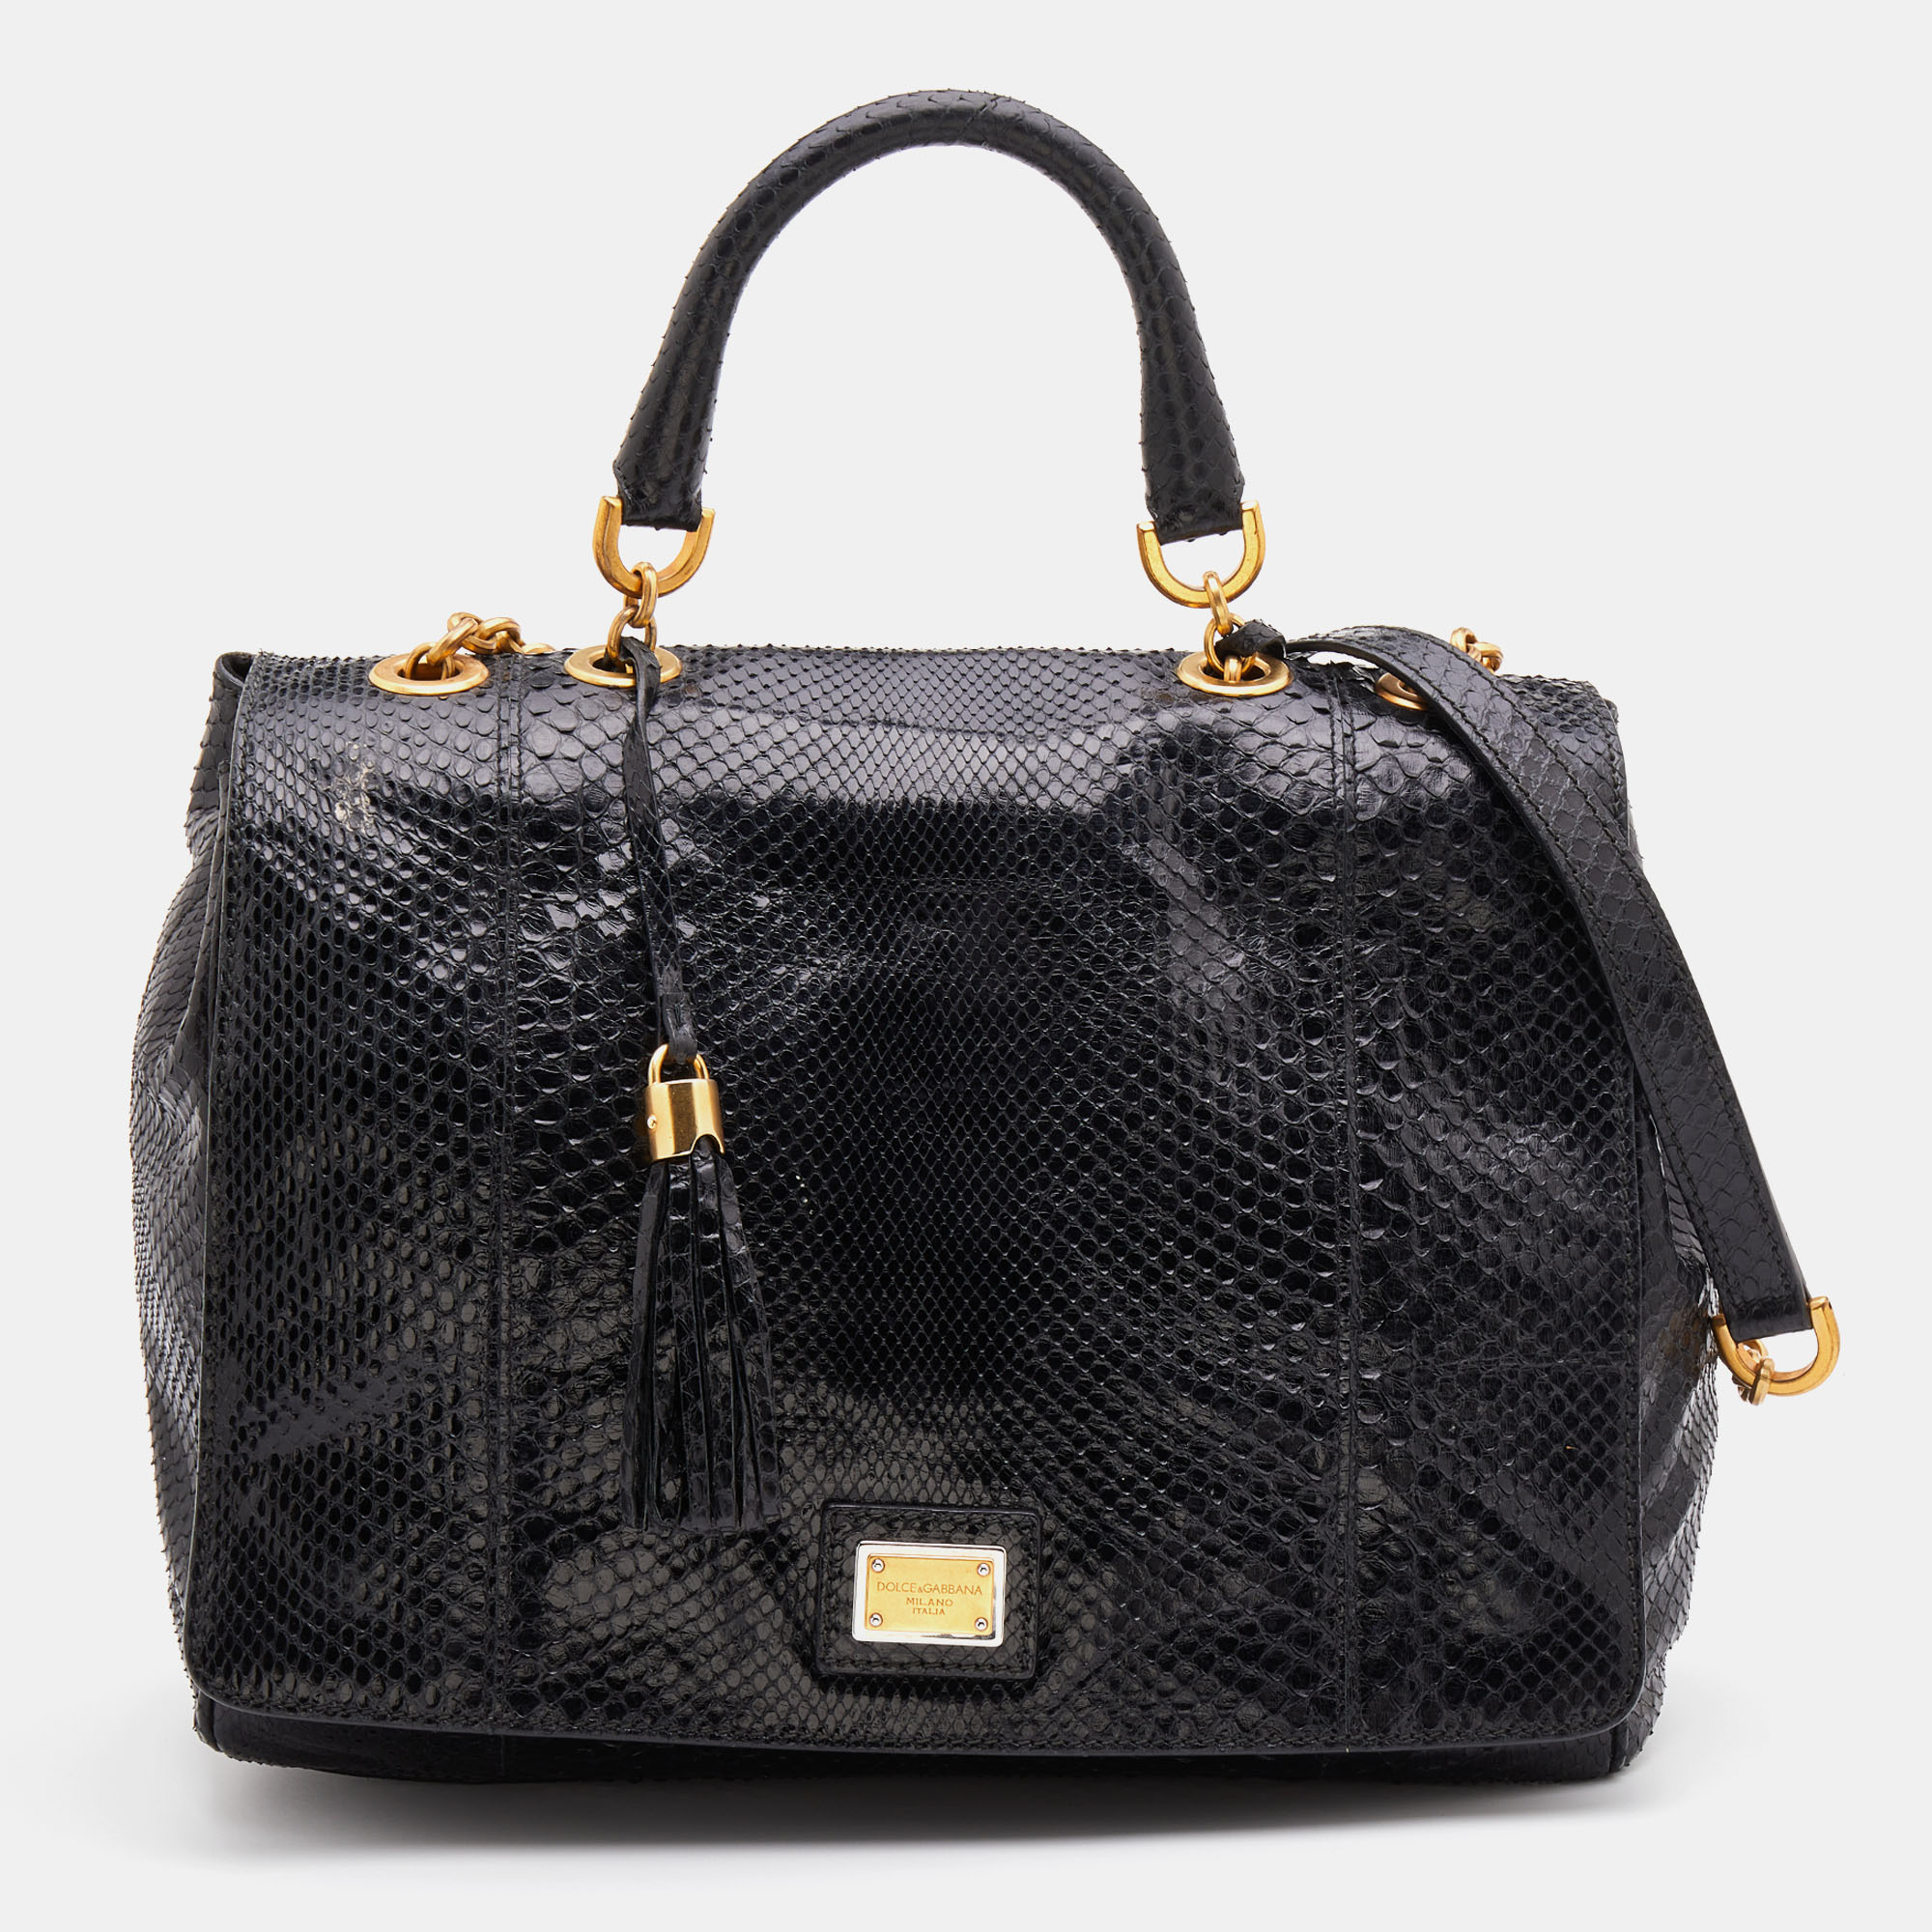 Pre-owned Dolce & Gabbana Black Python Leather Tassel Top Handle Bag